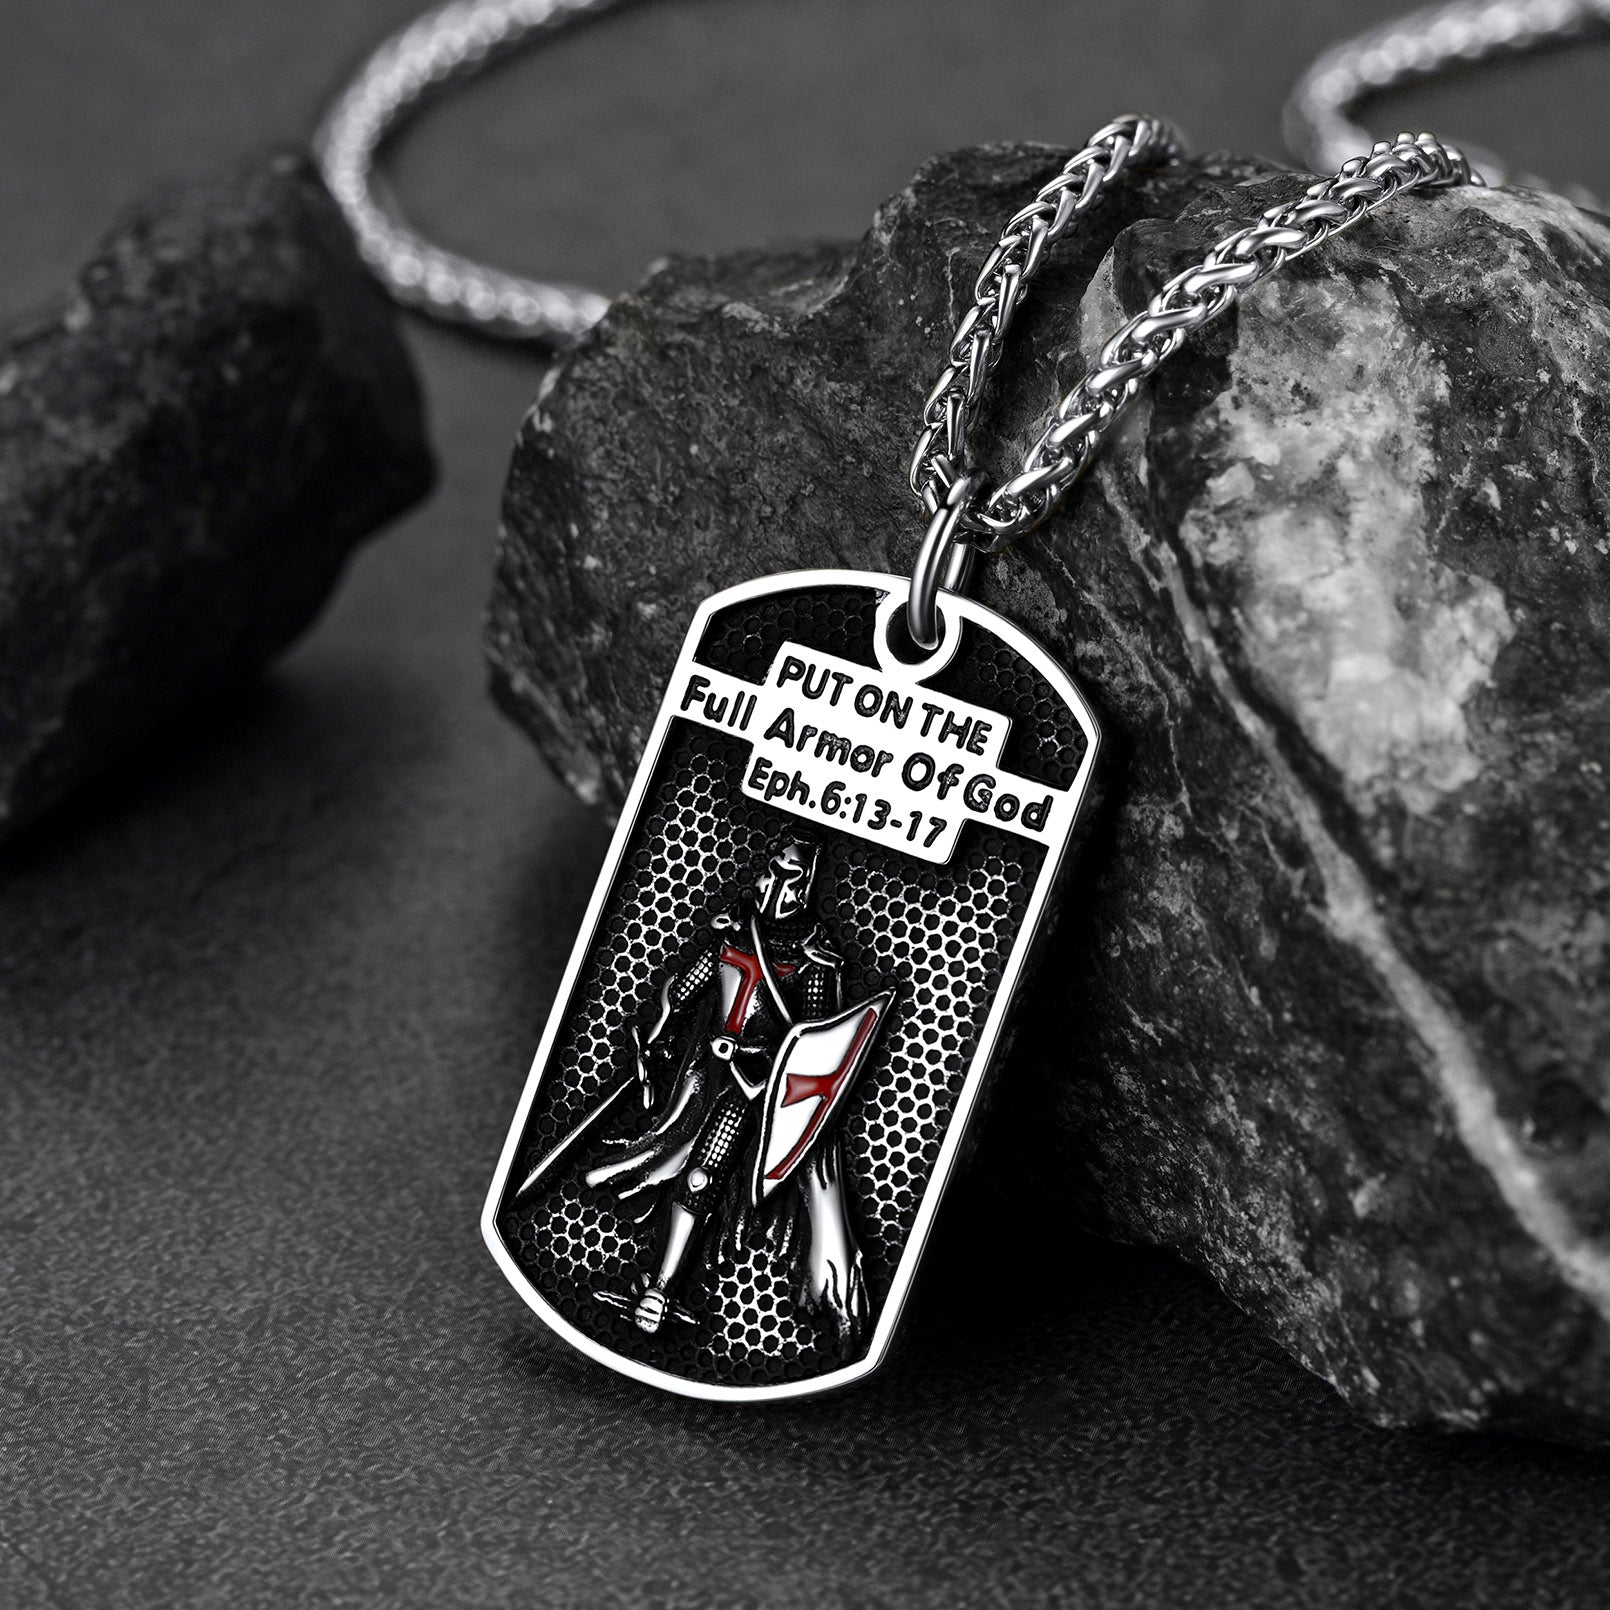 FaithHeart Religious Knights Templar Dog Tag Necklace For Men FaithHeart